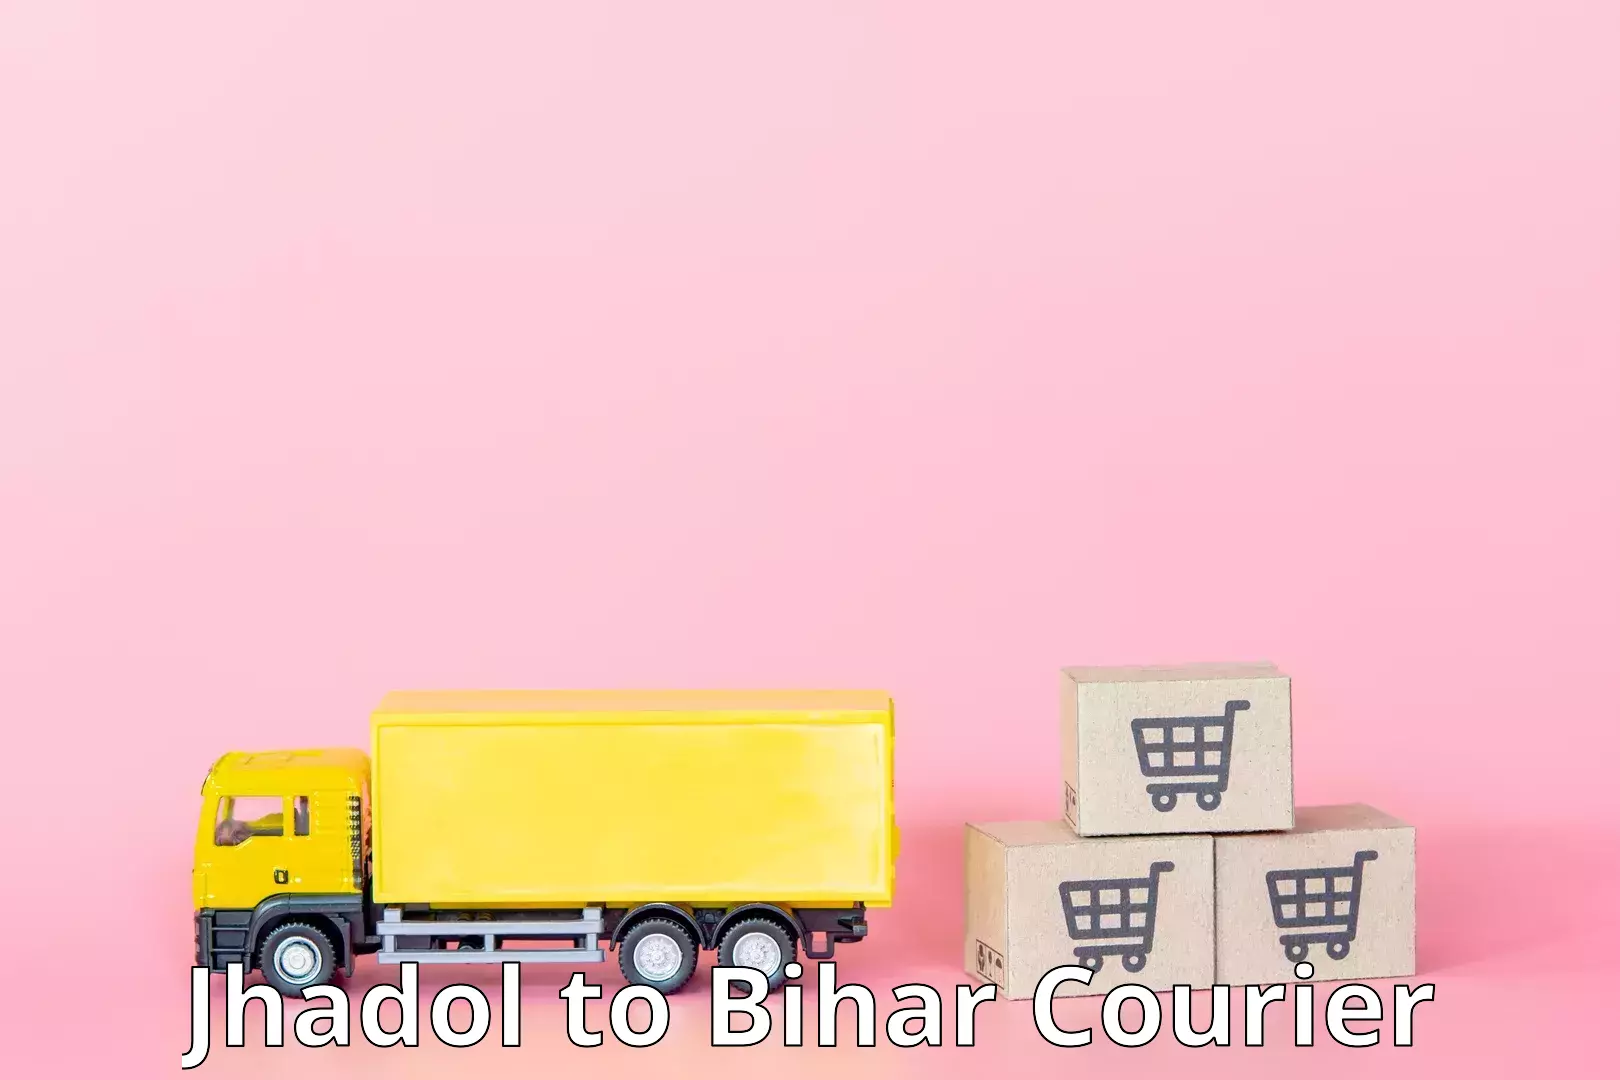 Reliable package handling Jhadol to Bihar